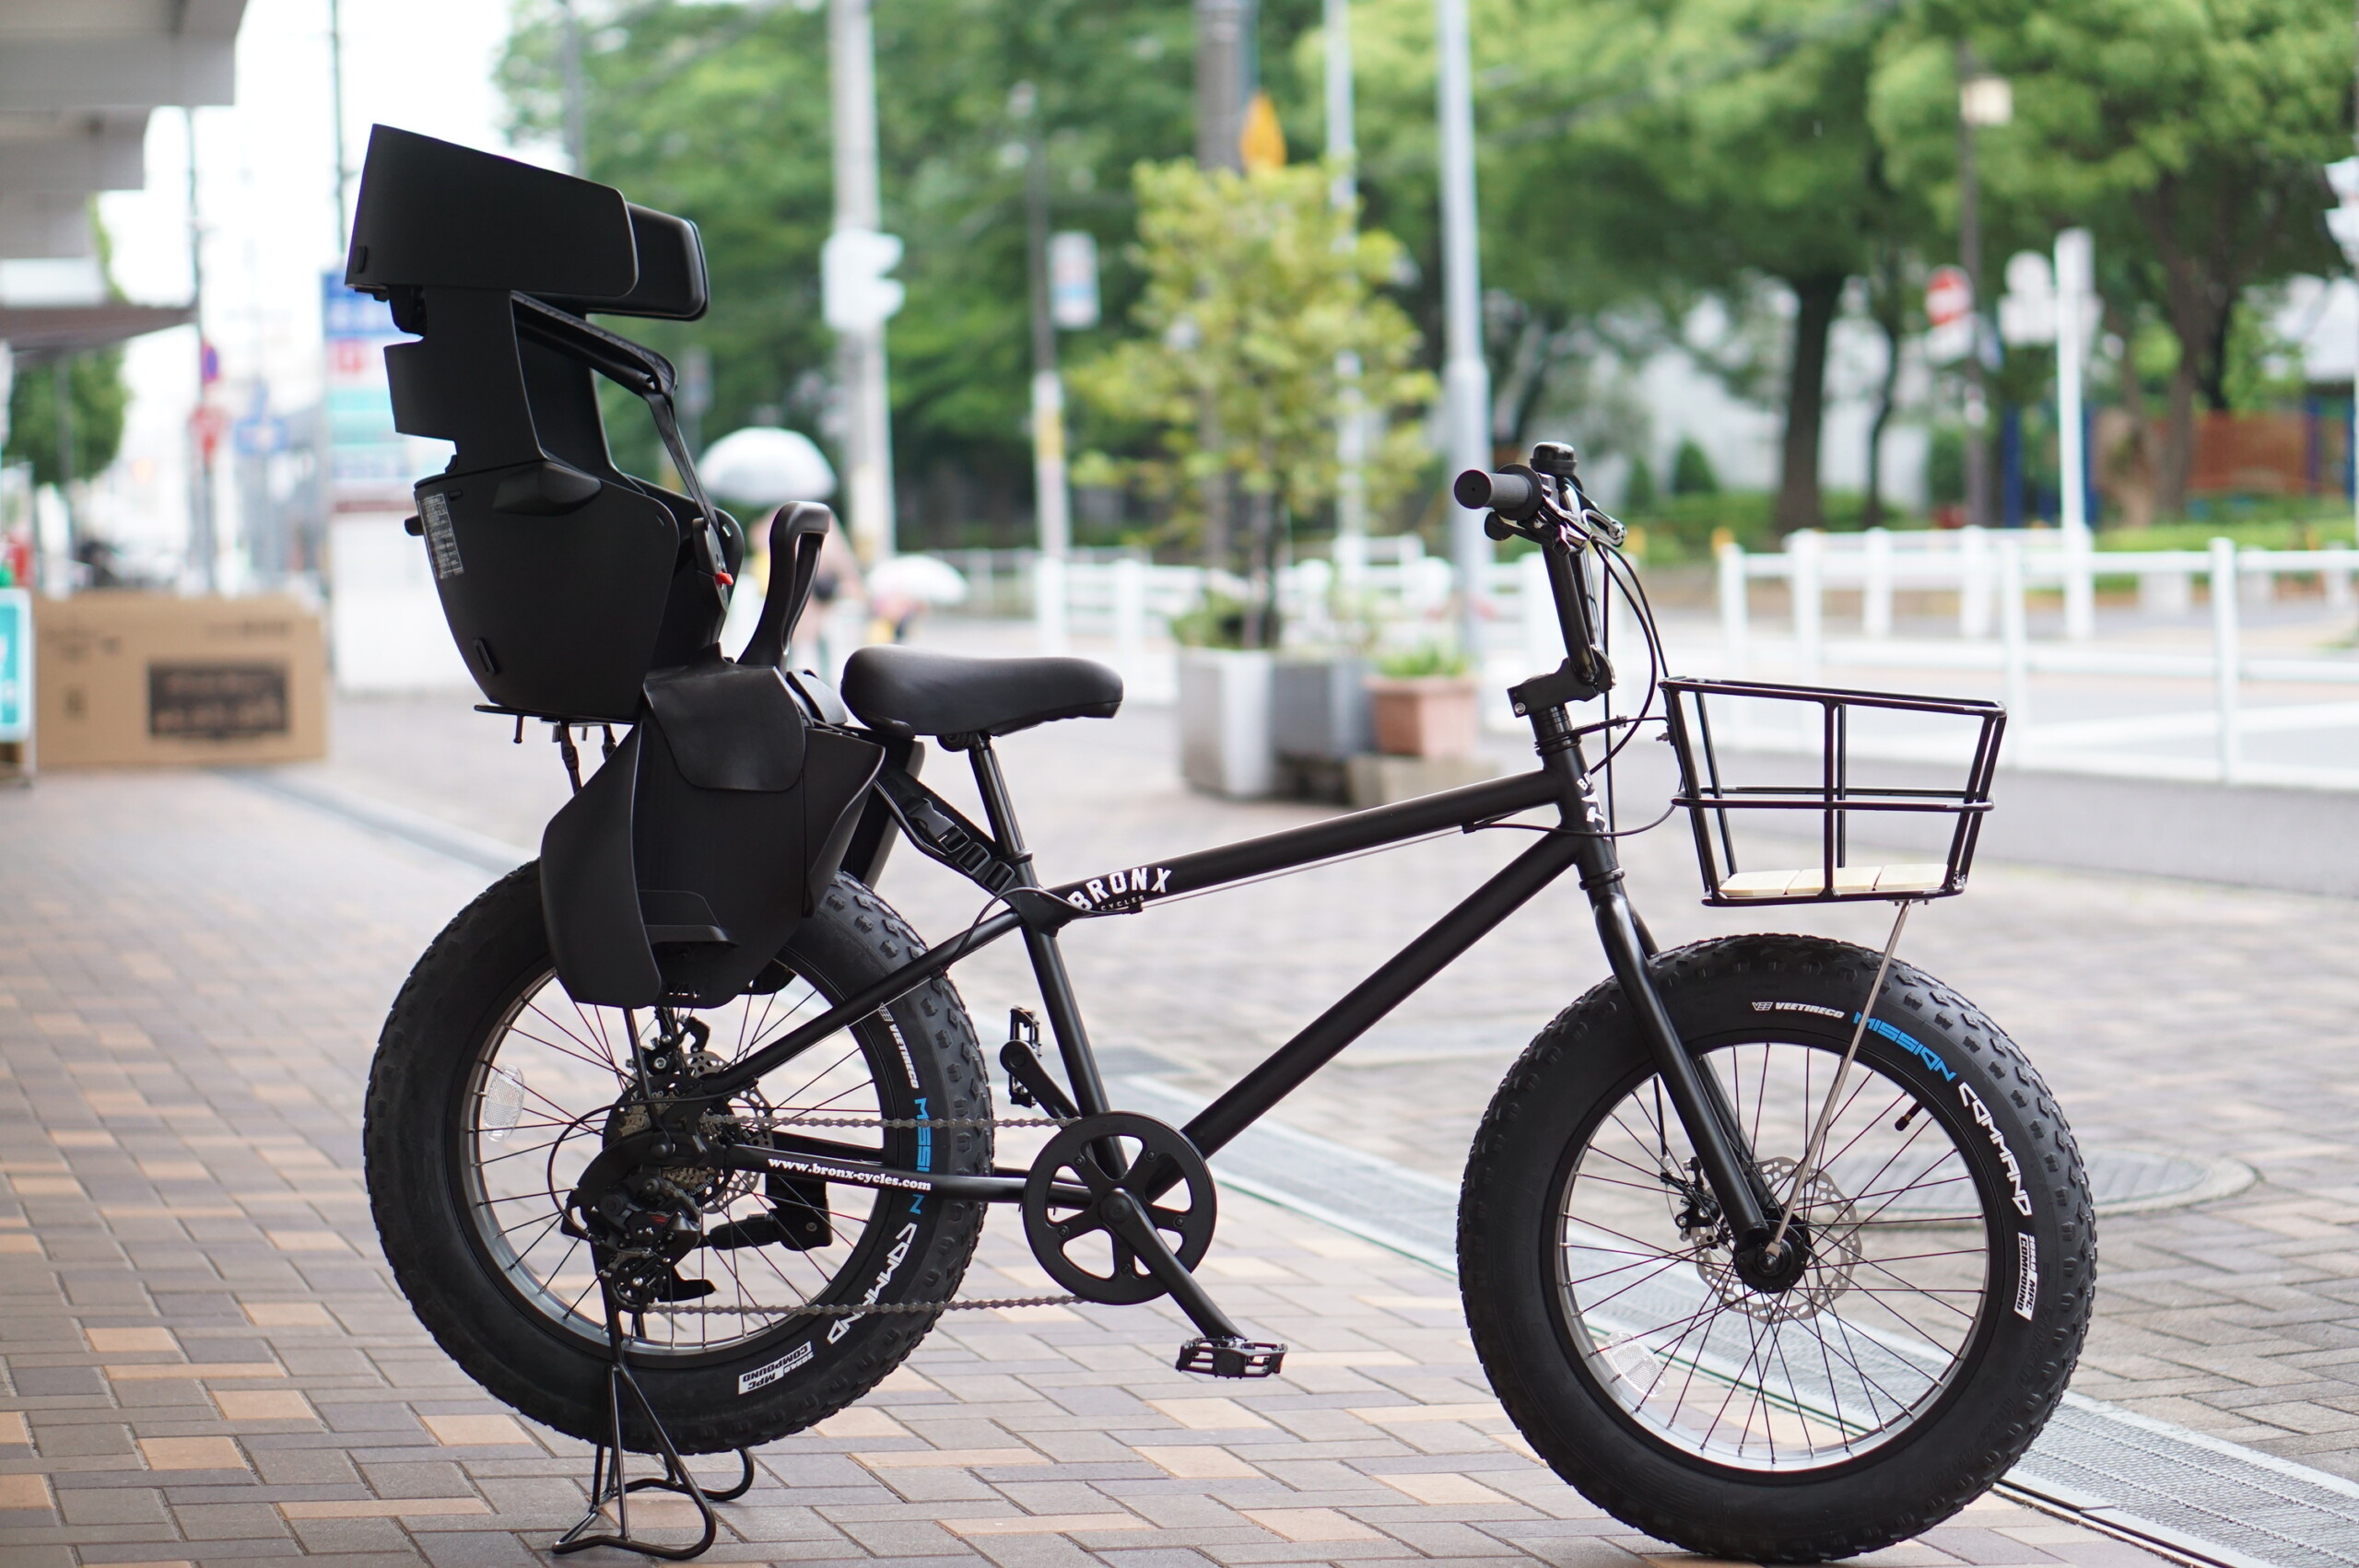 PETIT MOMON子供乗せ自転車 - 福岡県の自転車